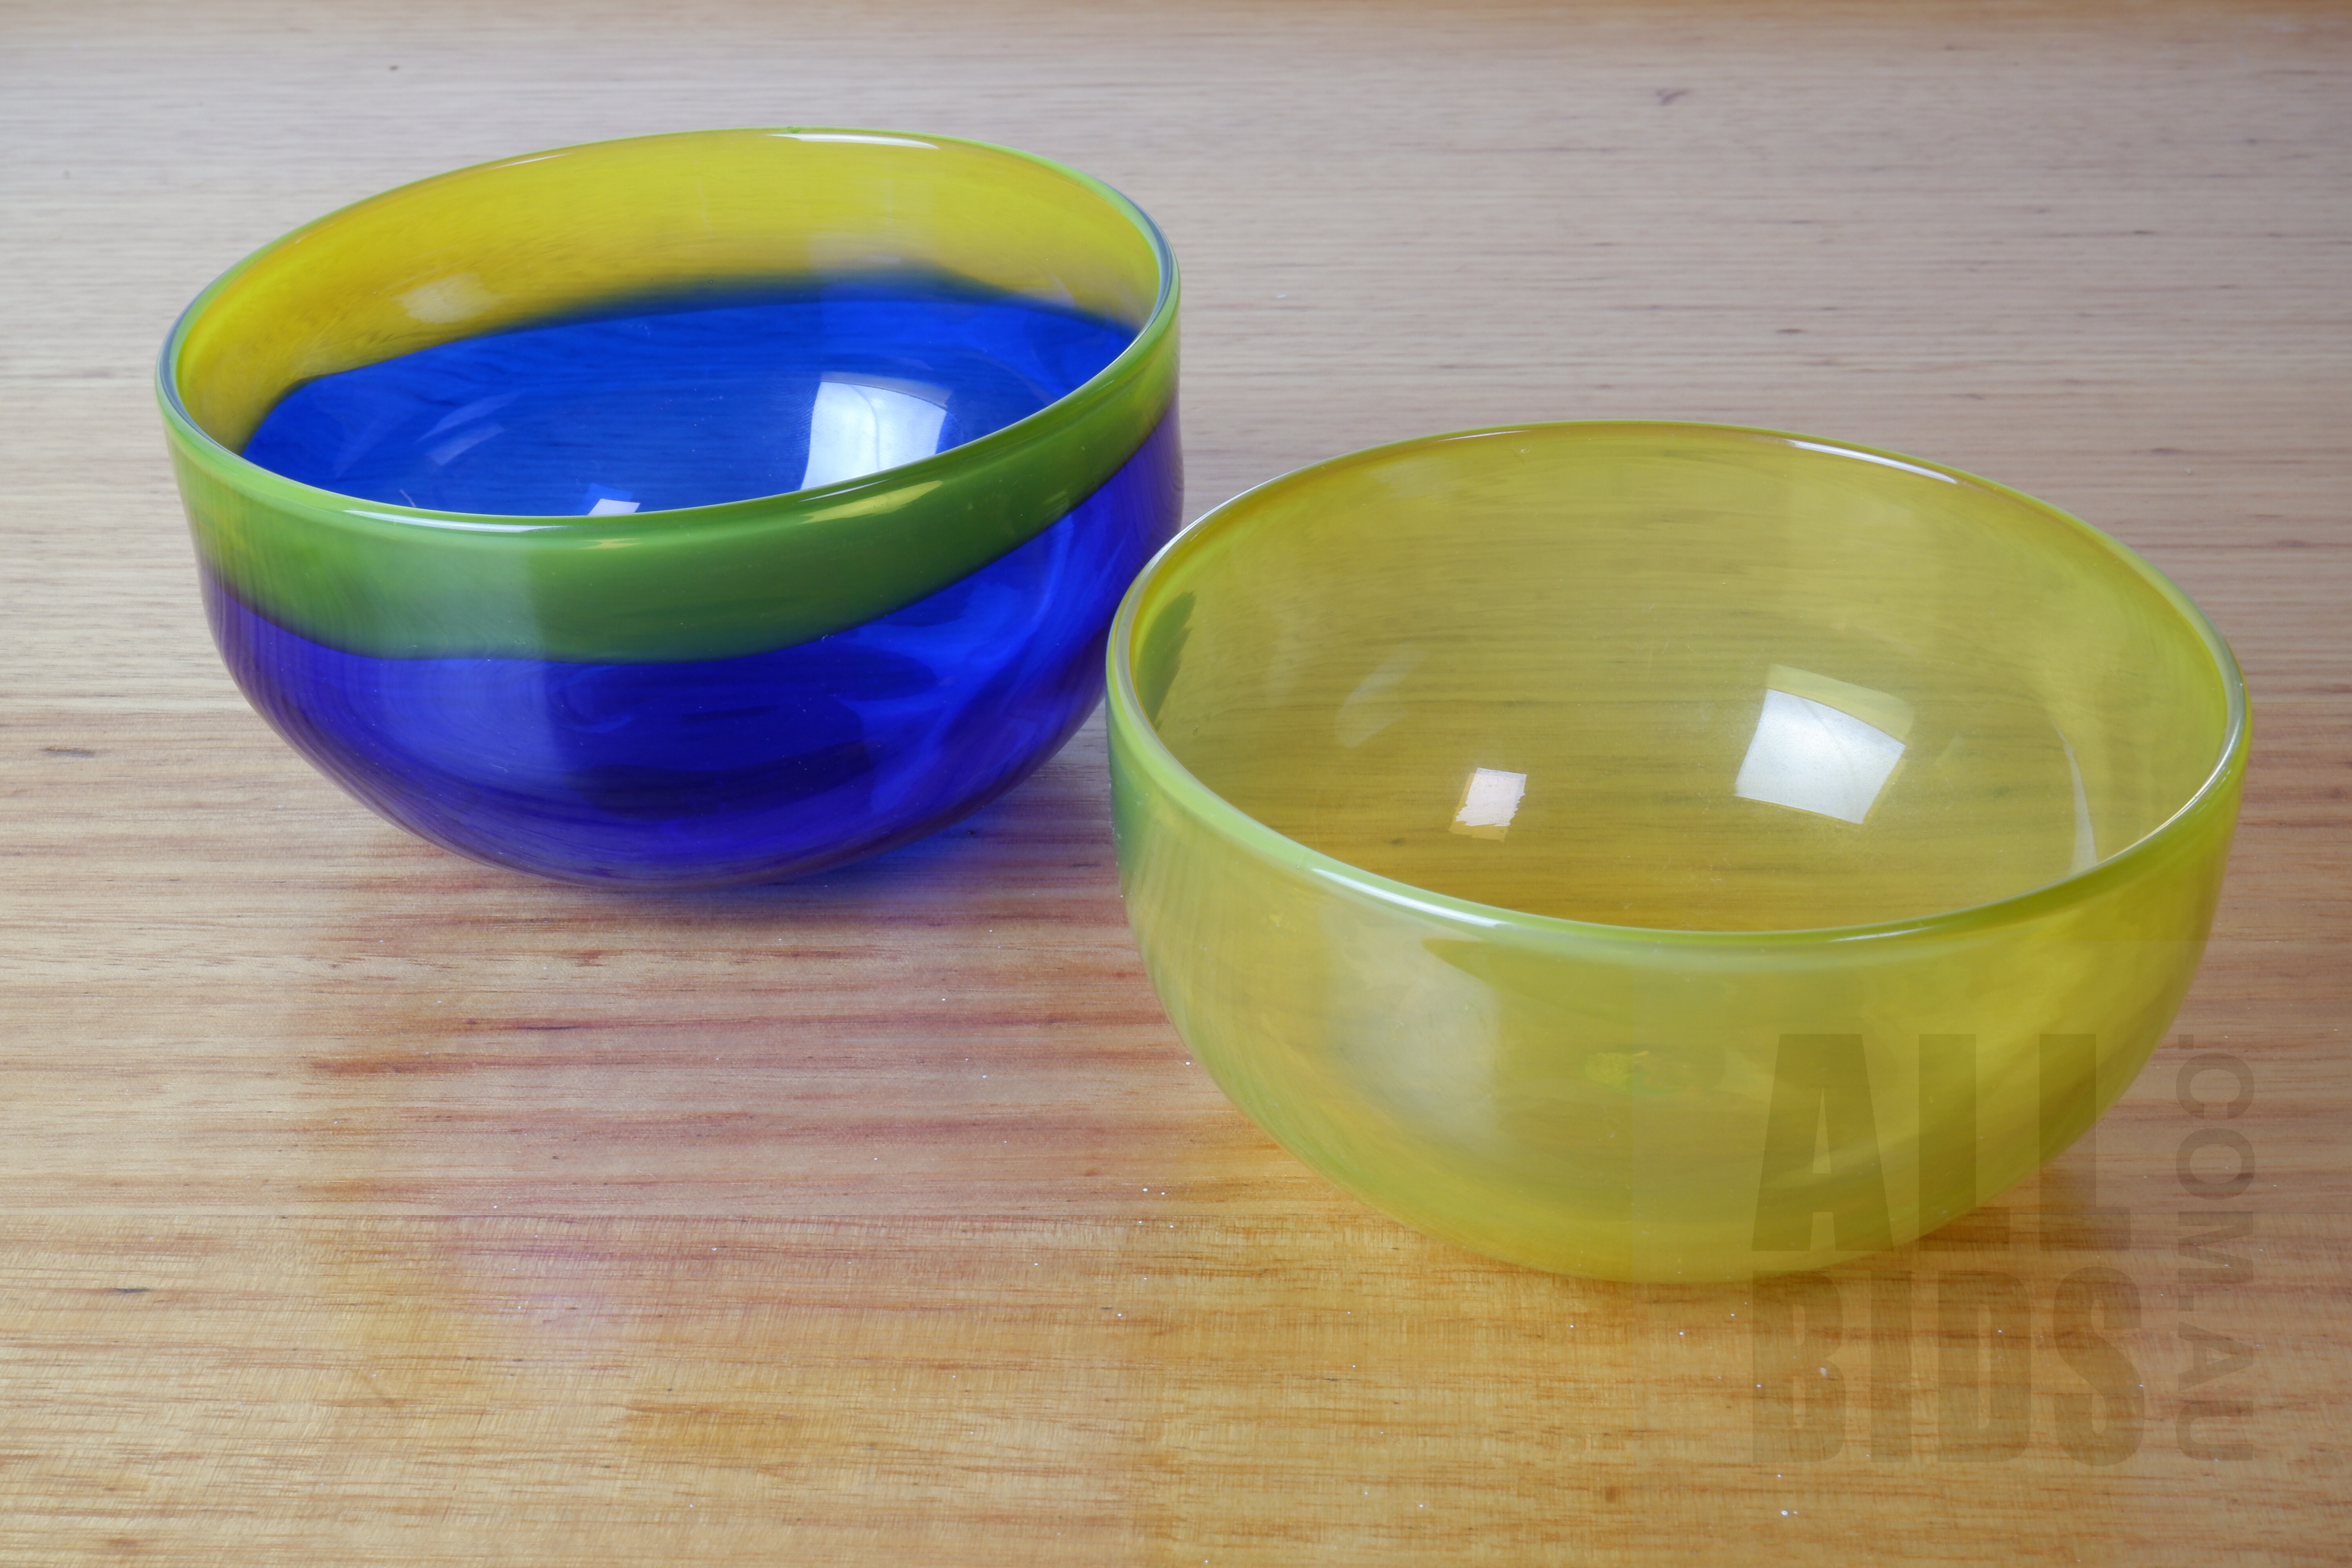 'Two Australian Studio Glass Bowls, Signed Indistinctly'